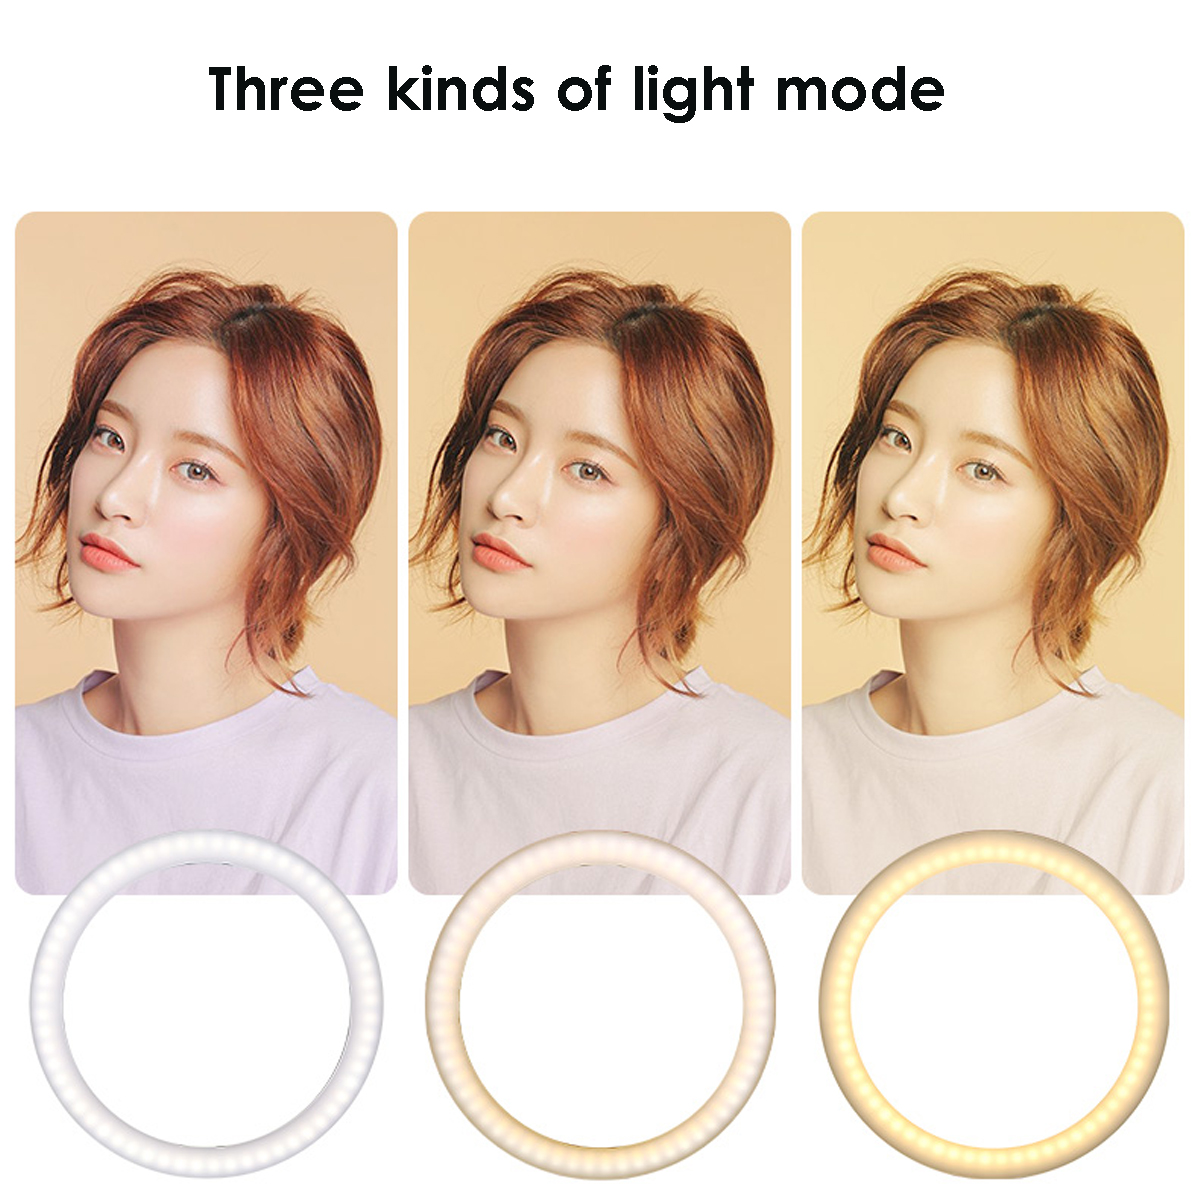 102-inch-Diameter-10-Brightness-RGB-LED-Makeup-Fill-Light-Selfie-Ring-Lamp-Phone-Holder-Tripod-Stand-1788455-3